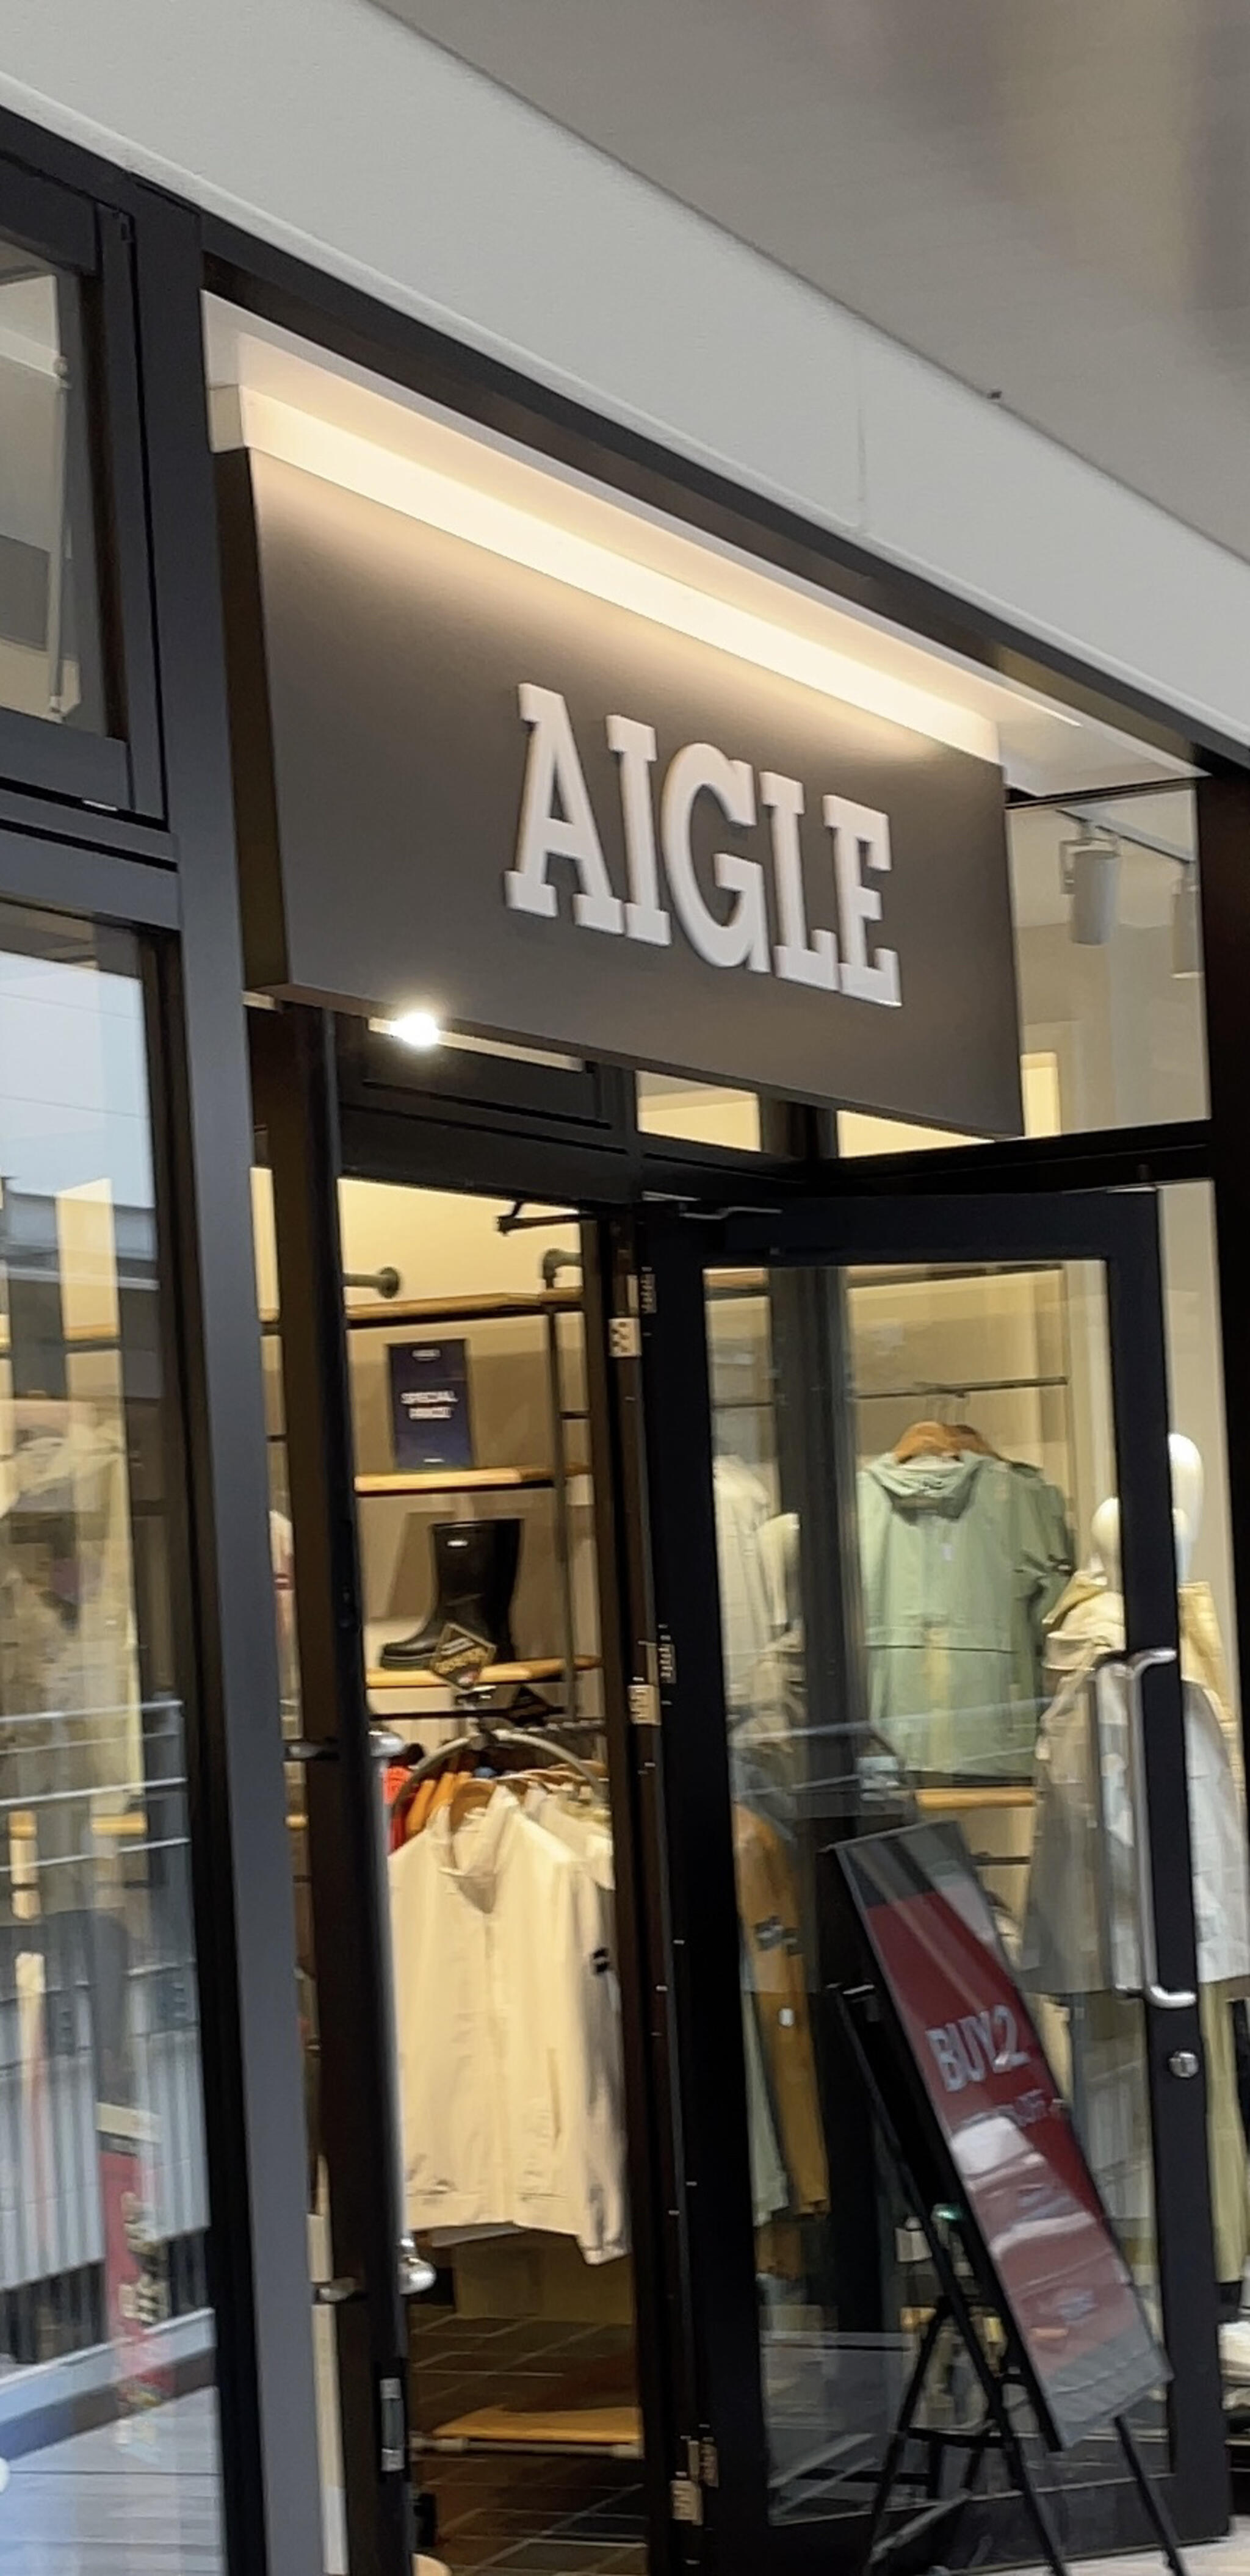 AIGLE 神戸店の代表写真1